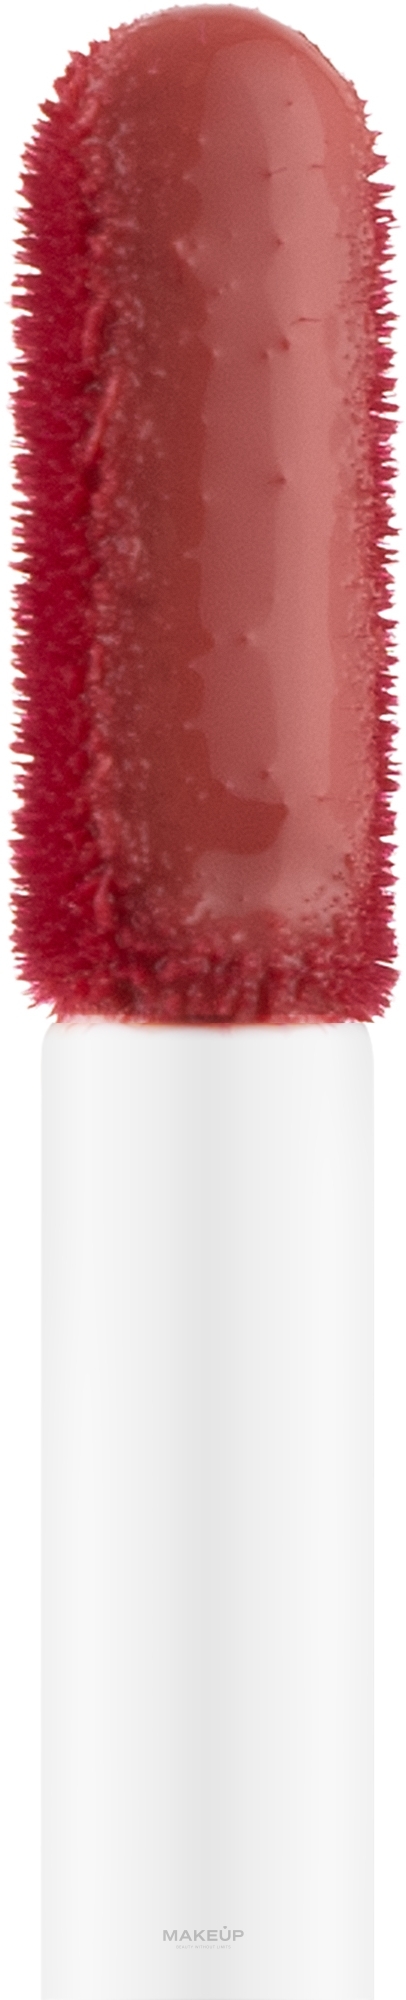 Tint do ust - Dior Addict Lip Tint — Zdjęcie 251 - Natural Peach